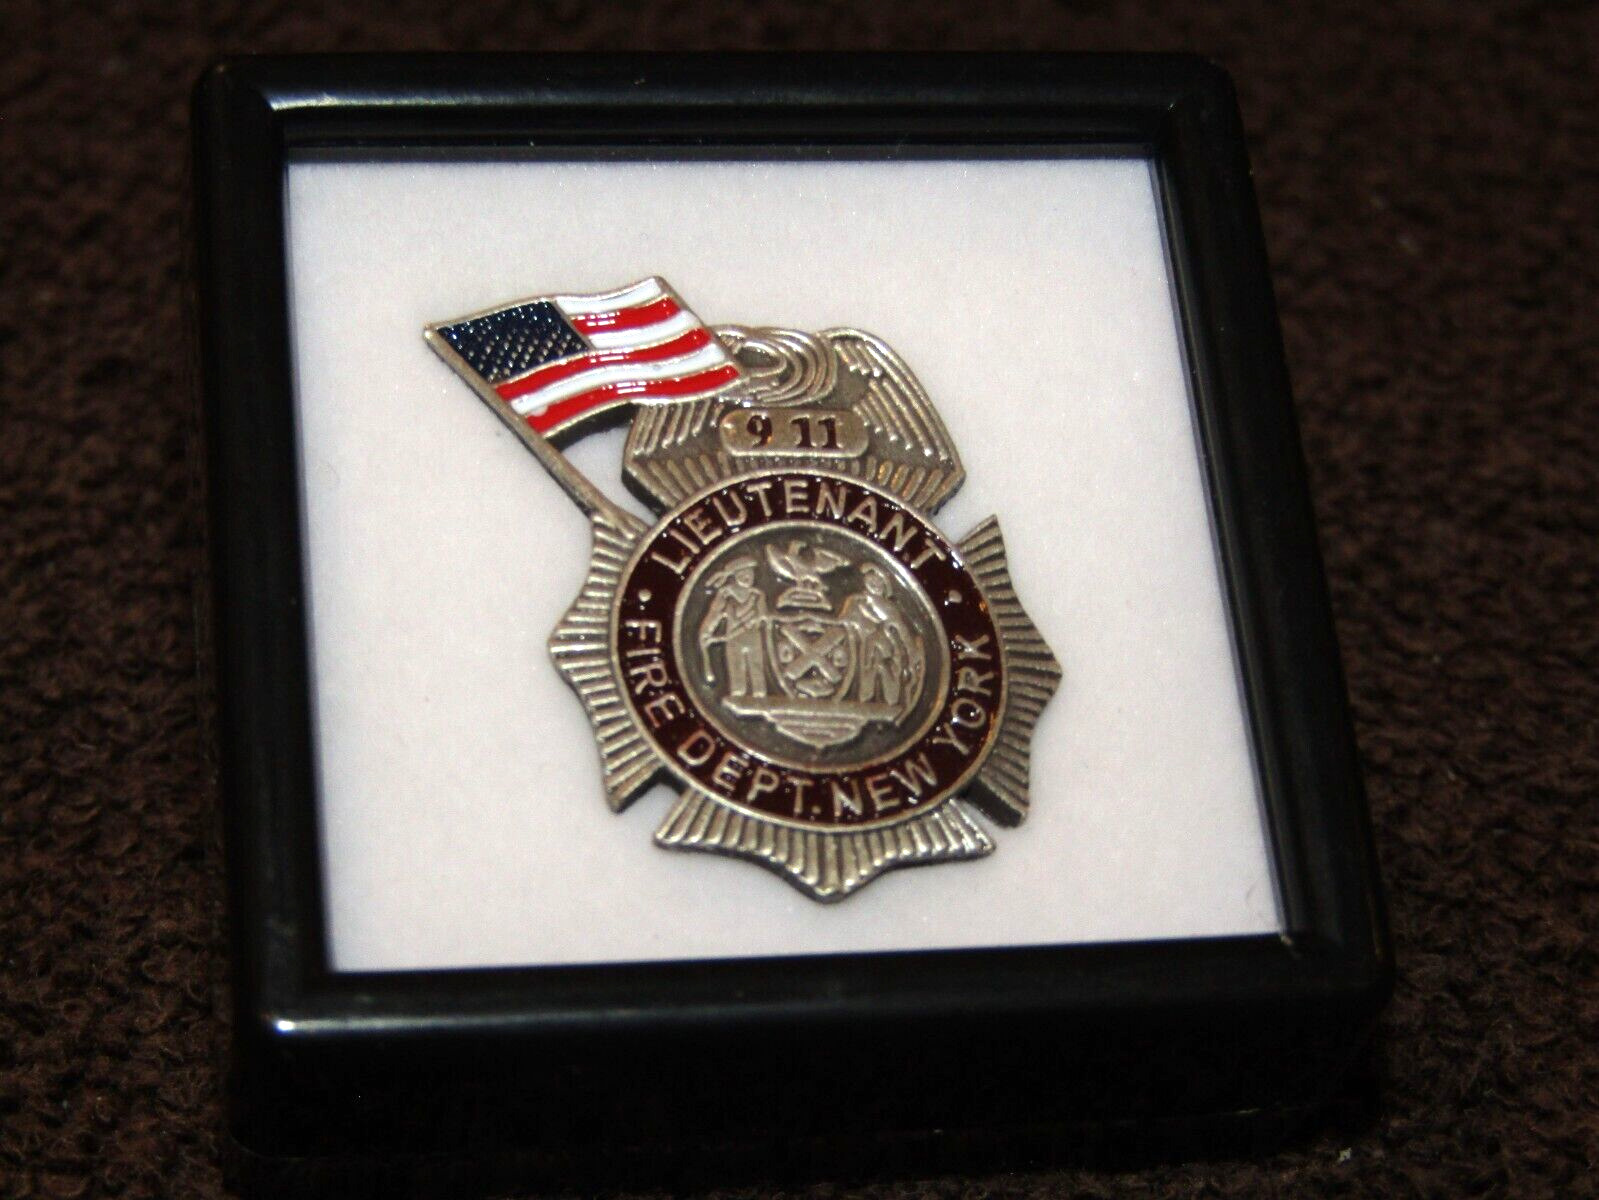 New York City Firefighter FDNY Lieutenant 9/11 Commemorative Lapel Pin